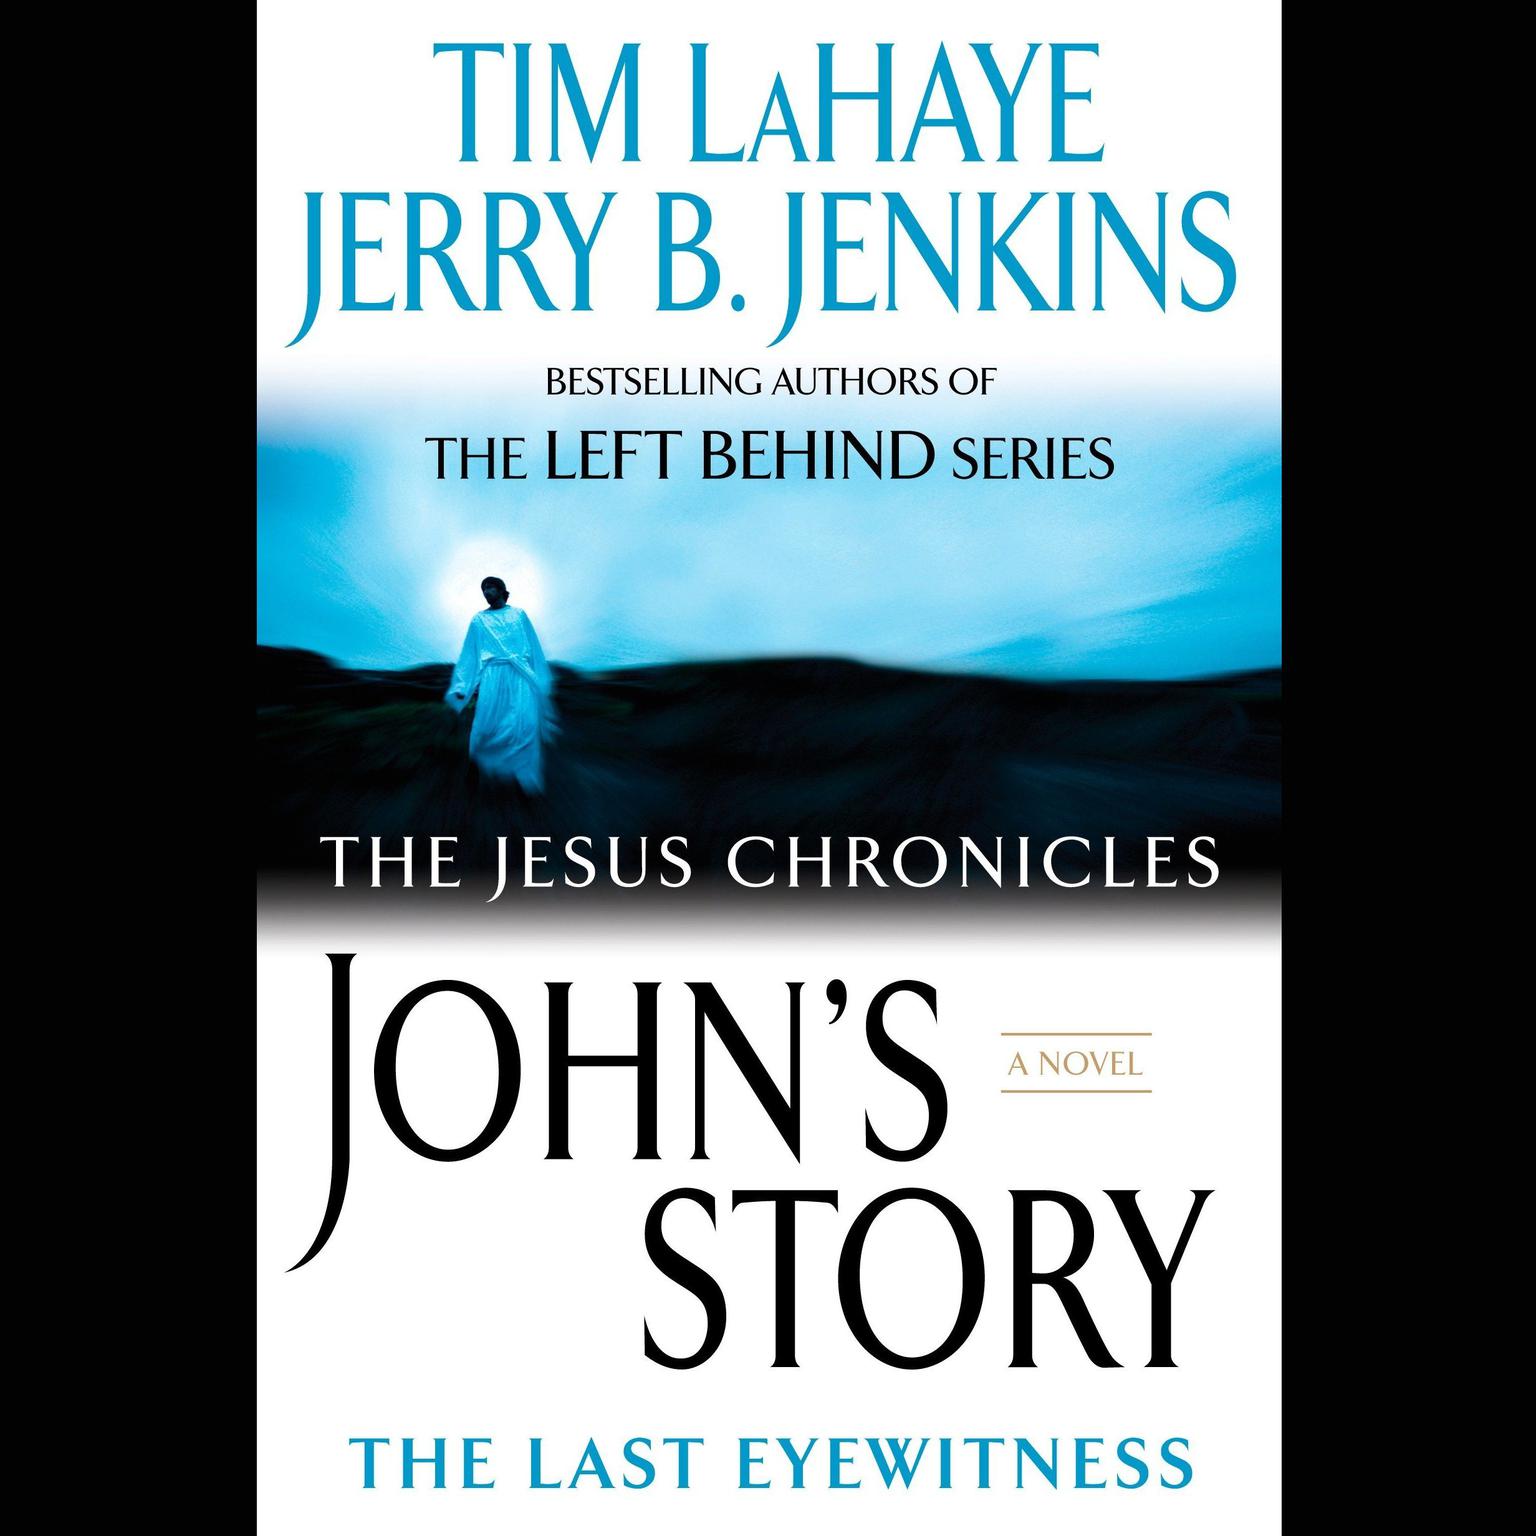 Johns Story: The Last Eyewitness Audiobook, by Jerry B. Jenkins